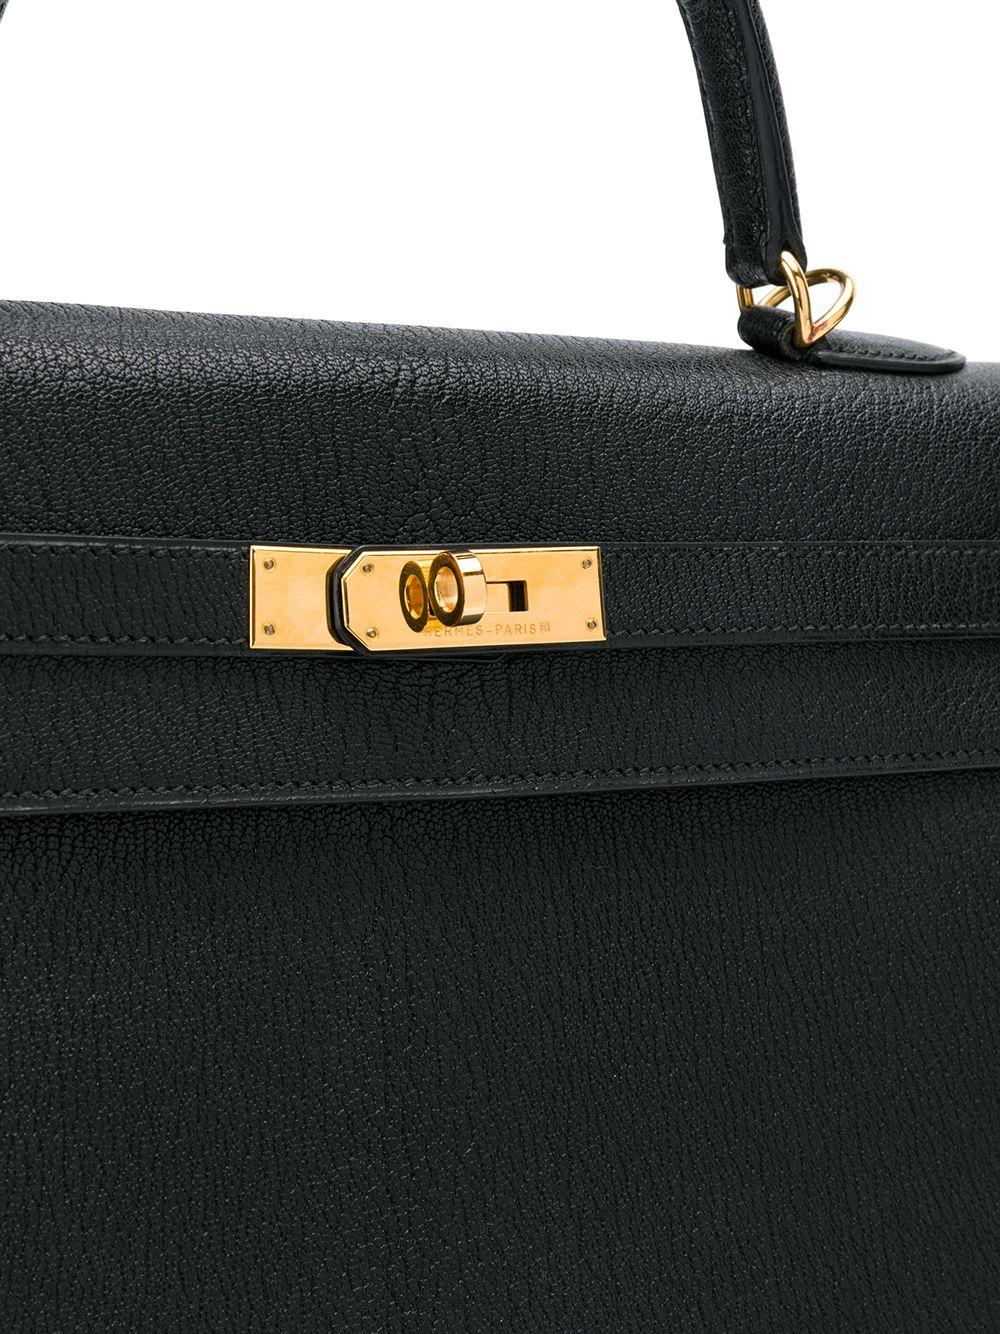 Women's Hermès Black 35cm Kelly Sellier Bag